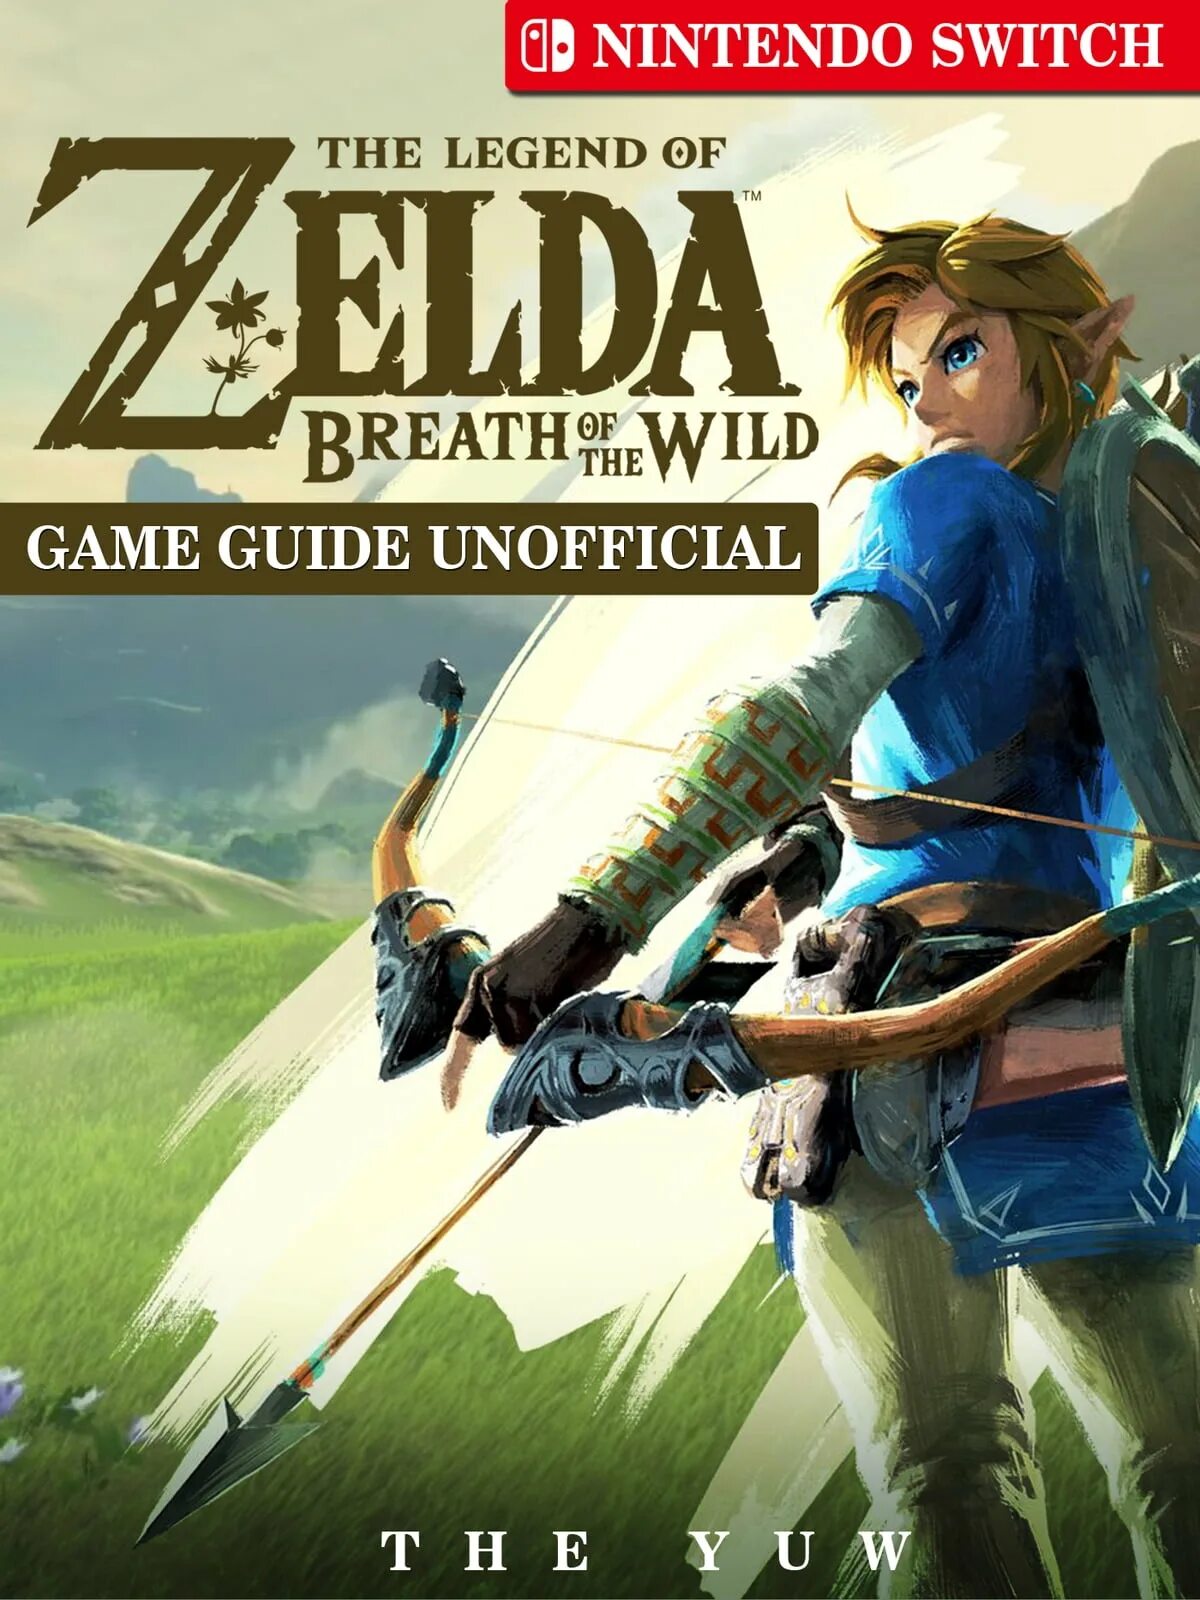 Zelda nintendo switch wild. Игра Zelda для Nintendo Switch. Легенда о Зельде Нинтендо свитч. The Legend of Zelda Breath of the Wild Нинтендо. The Legend of Zelda Breath of the Wild Switch.